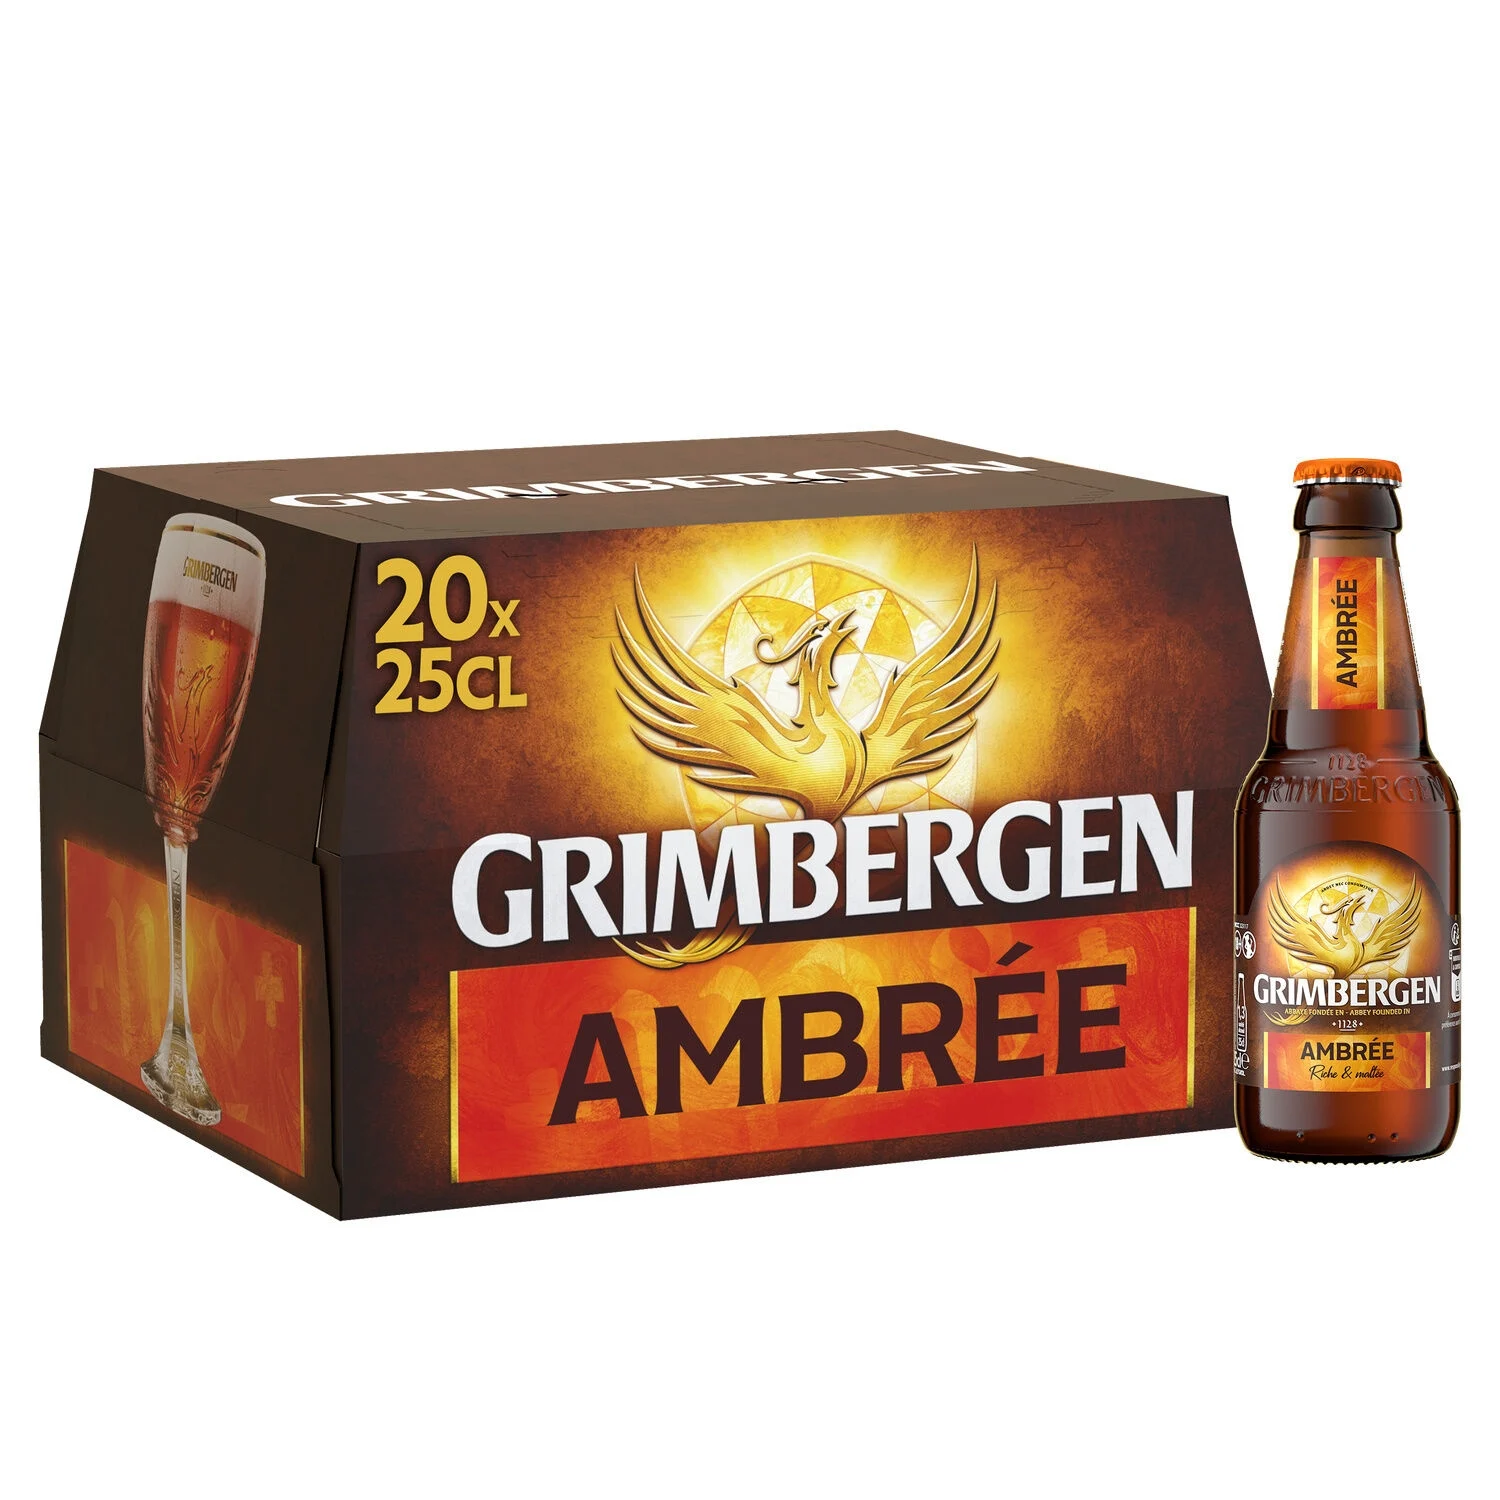 20x25cl Grimbergen Ambree 6 5